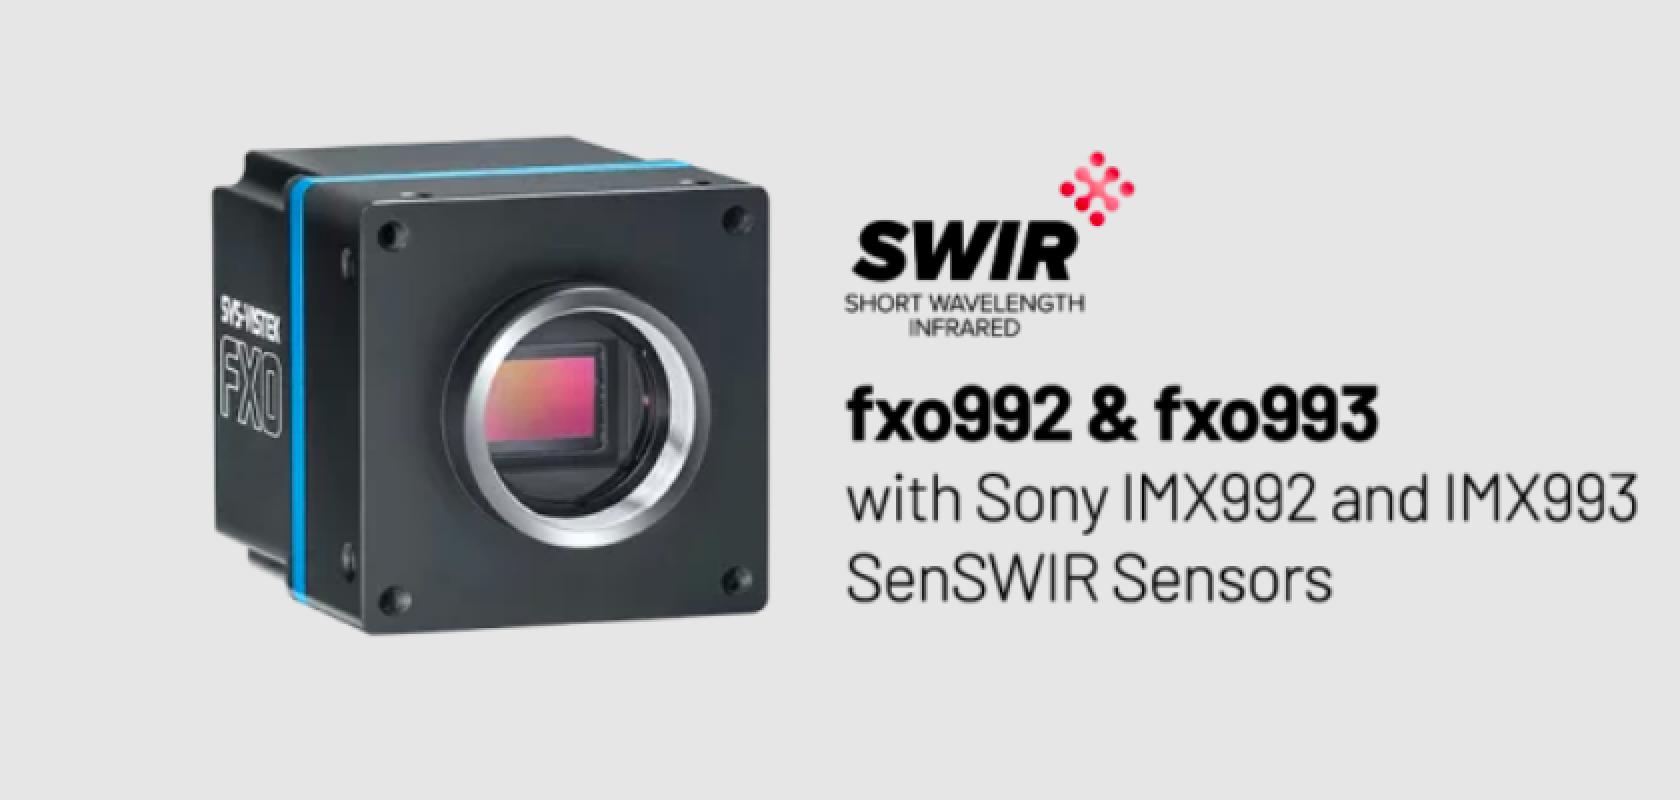 SVS-Vistek claim that the new releases are the fastest high-resolution shortwave infrared cameras currently available on the market (Image: SVS-Vistek)